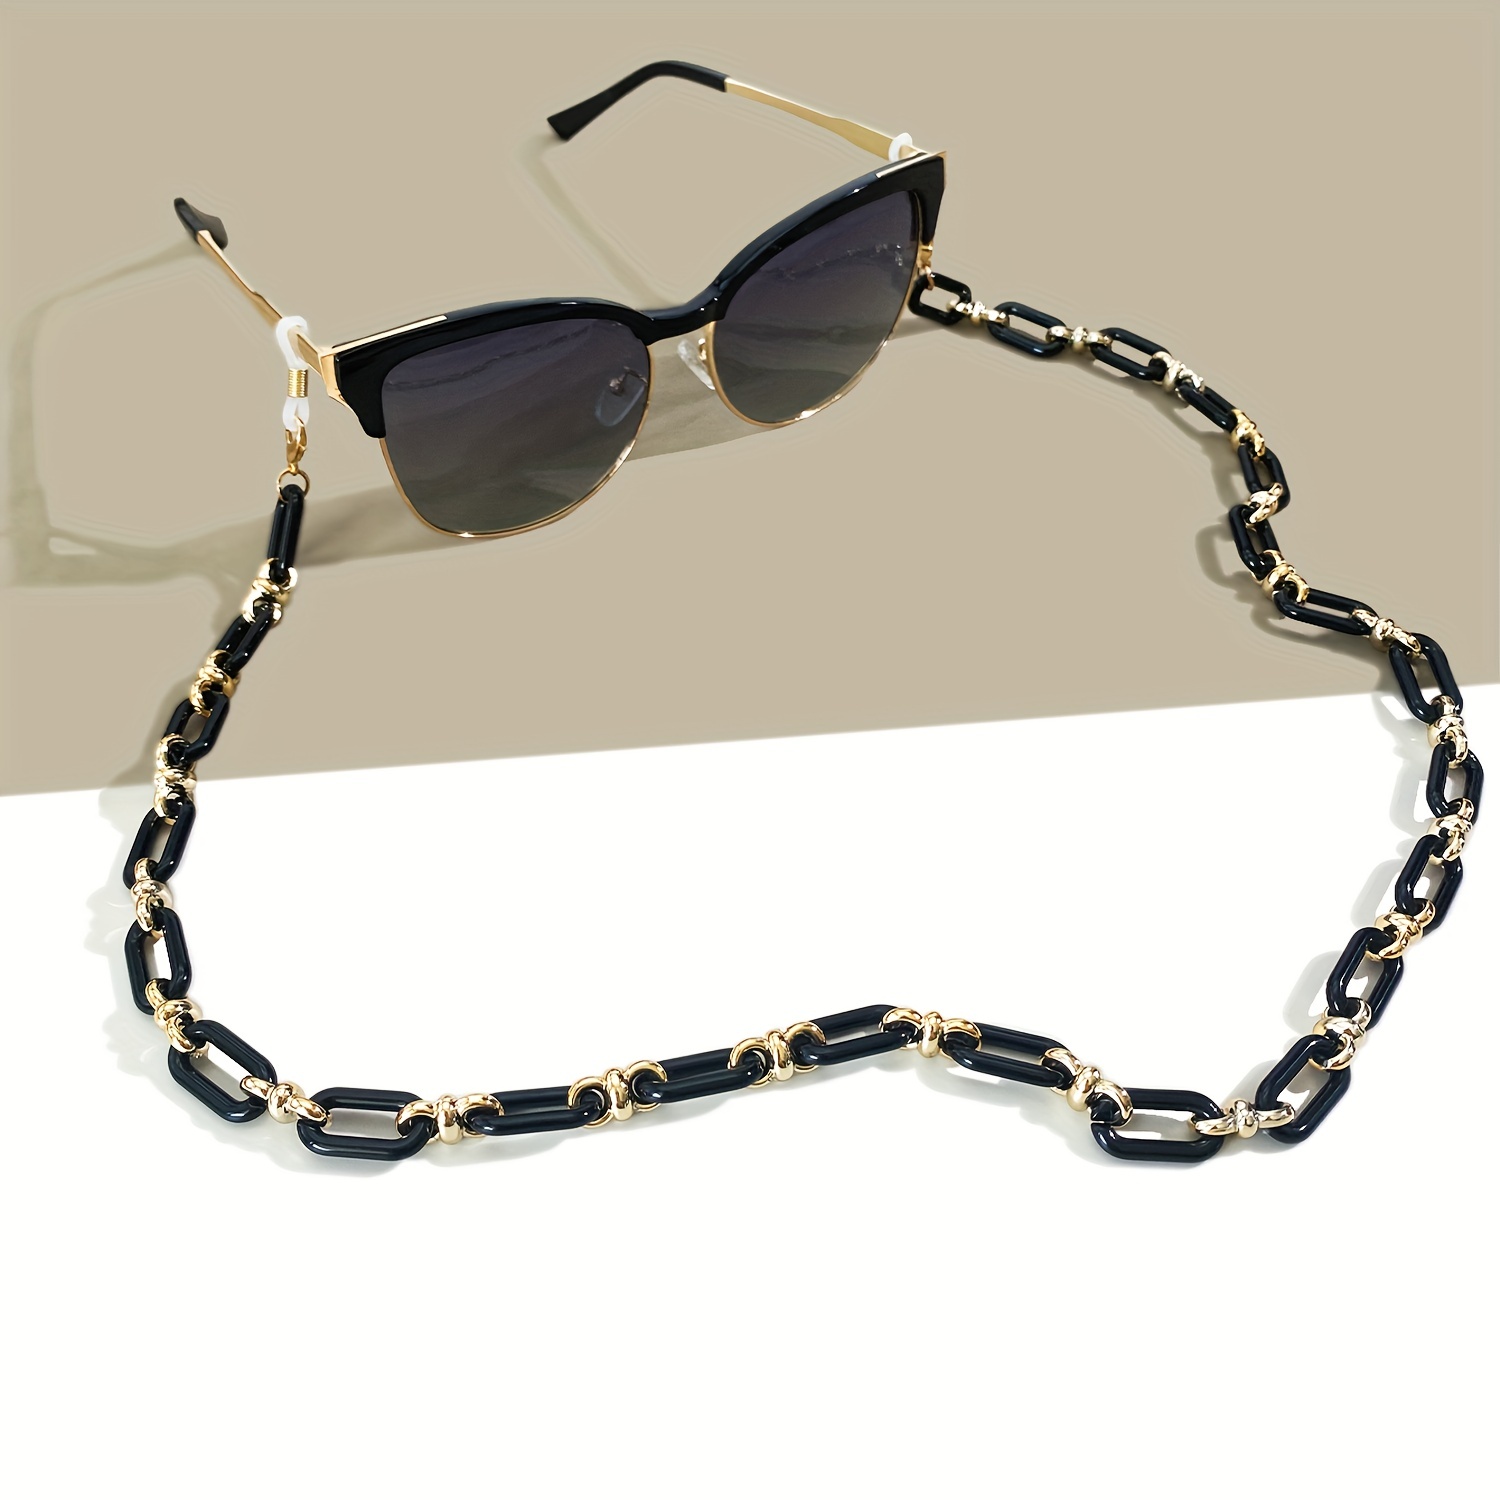 

Acrylic Glasses Chain Anti Slip Sunglasses Reading Glasses Lanyard Strap Adjustable Mask Face Covering Eyewear Retainer